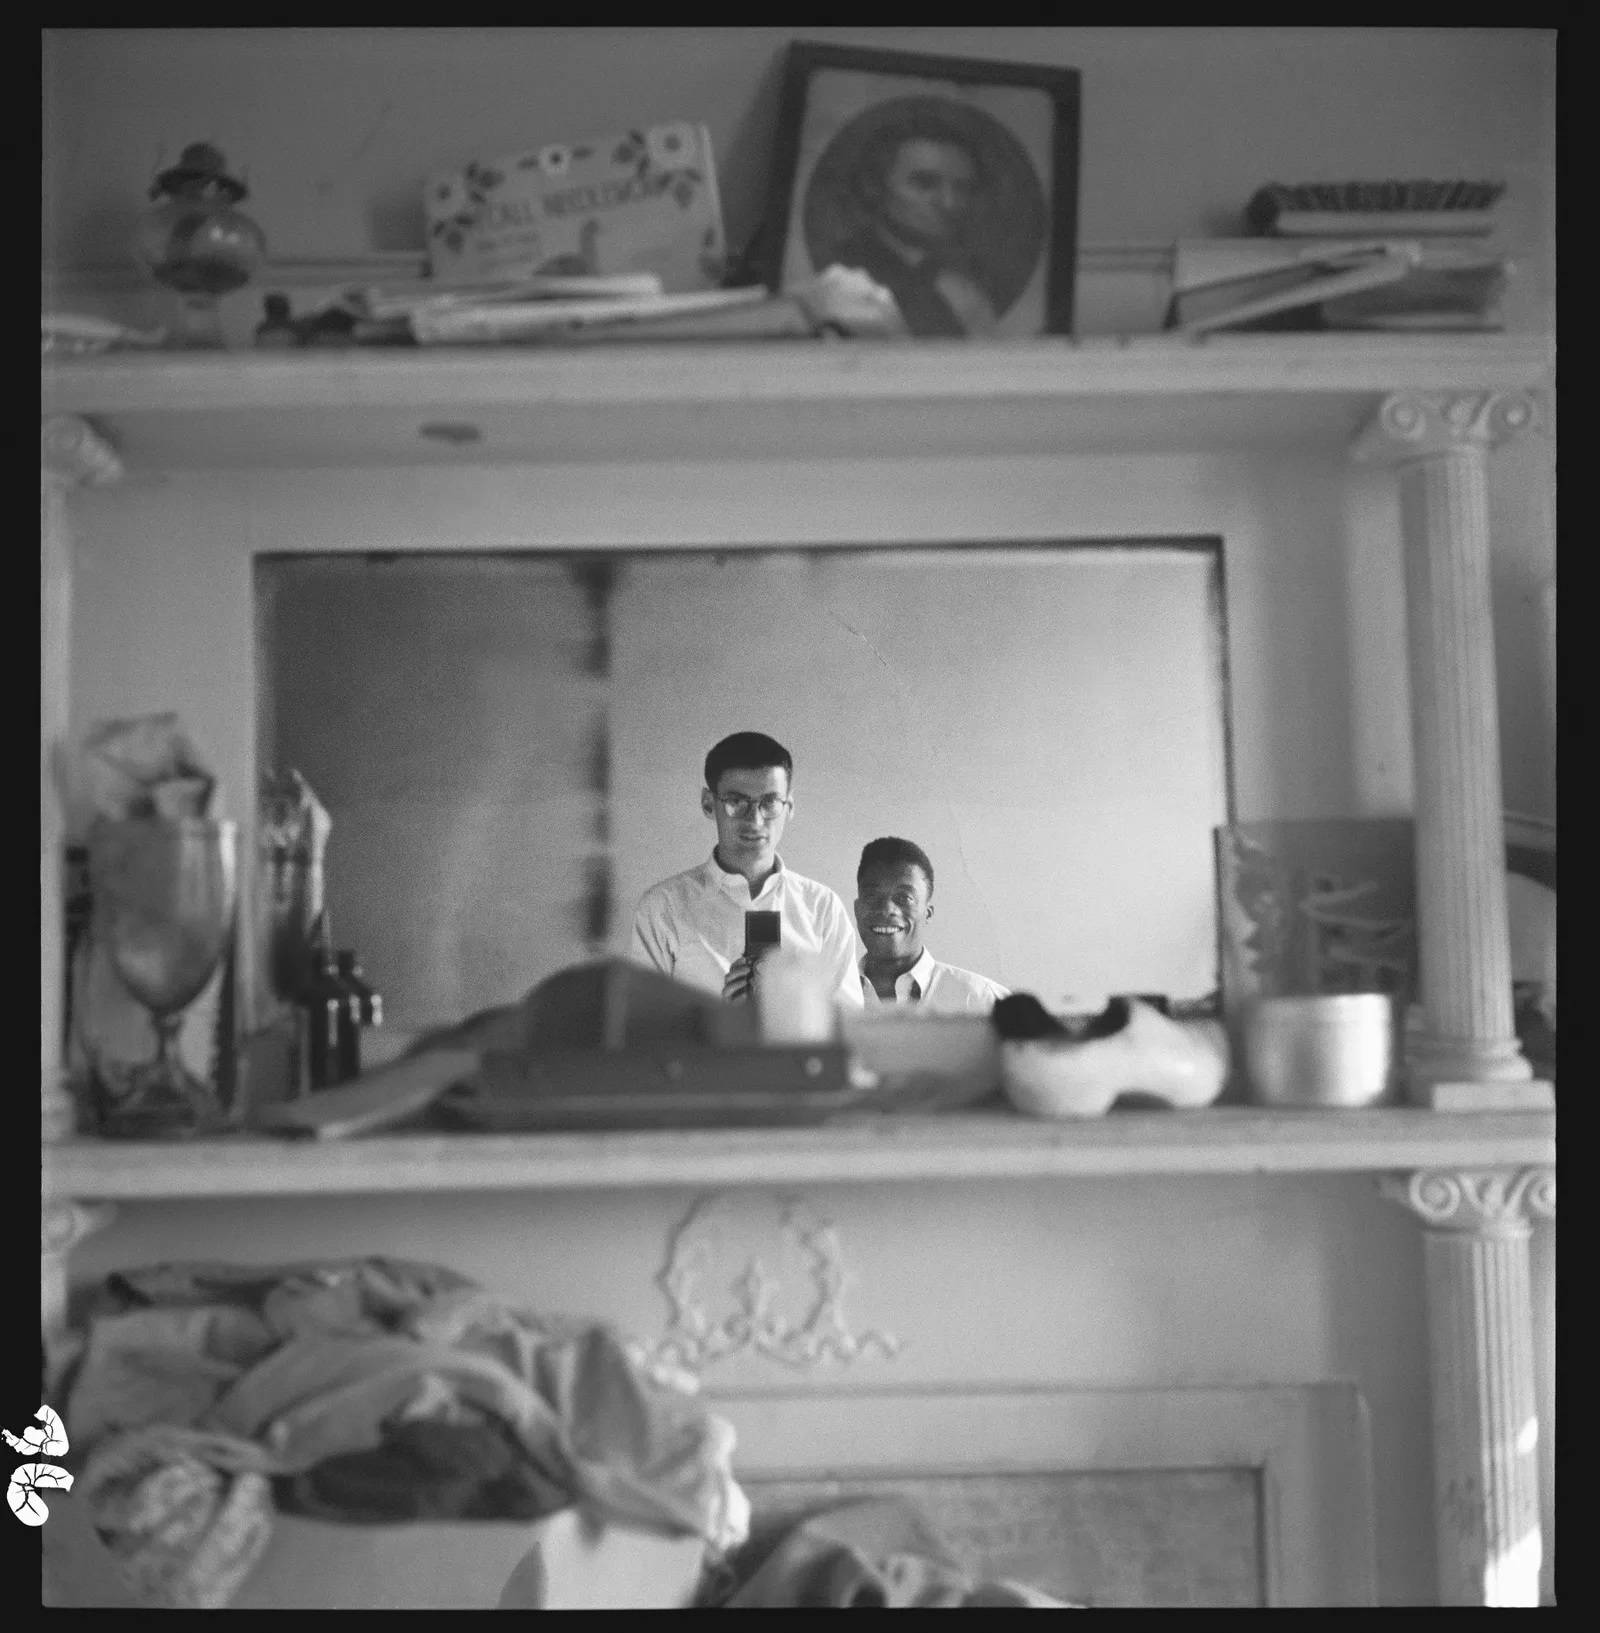 Richard Avedon, fotograf, i James Baldwin, pisarz, Harlem, 1946 (Fot. The Richard Avedon Foundation)